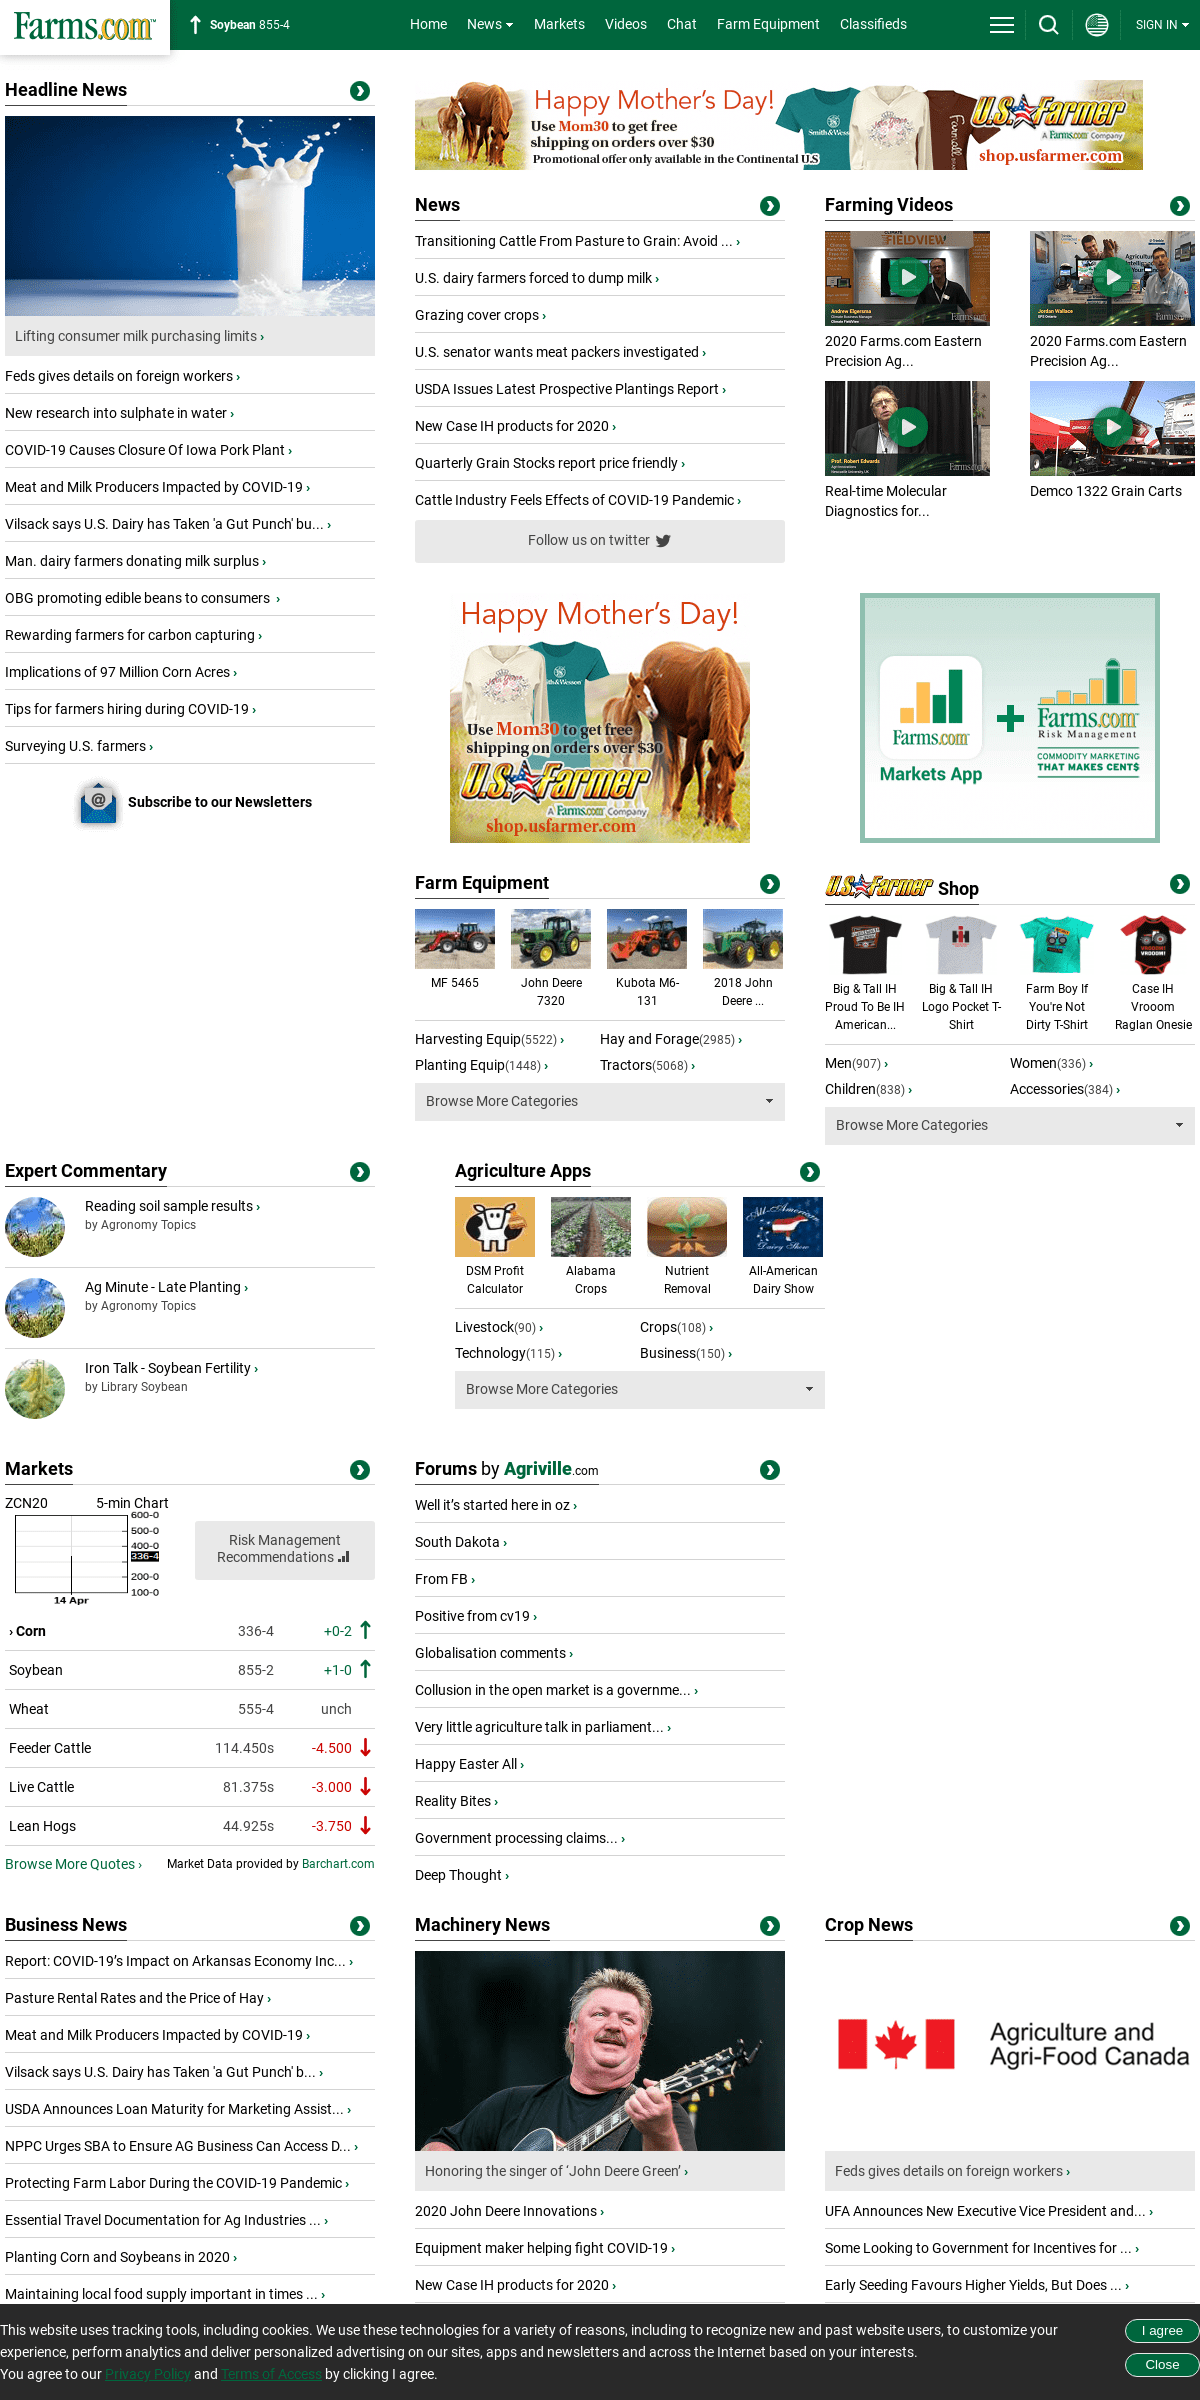 A complete backup of farms.com